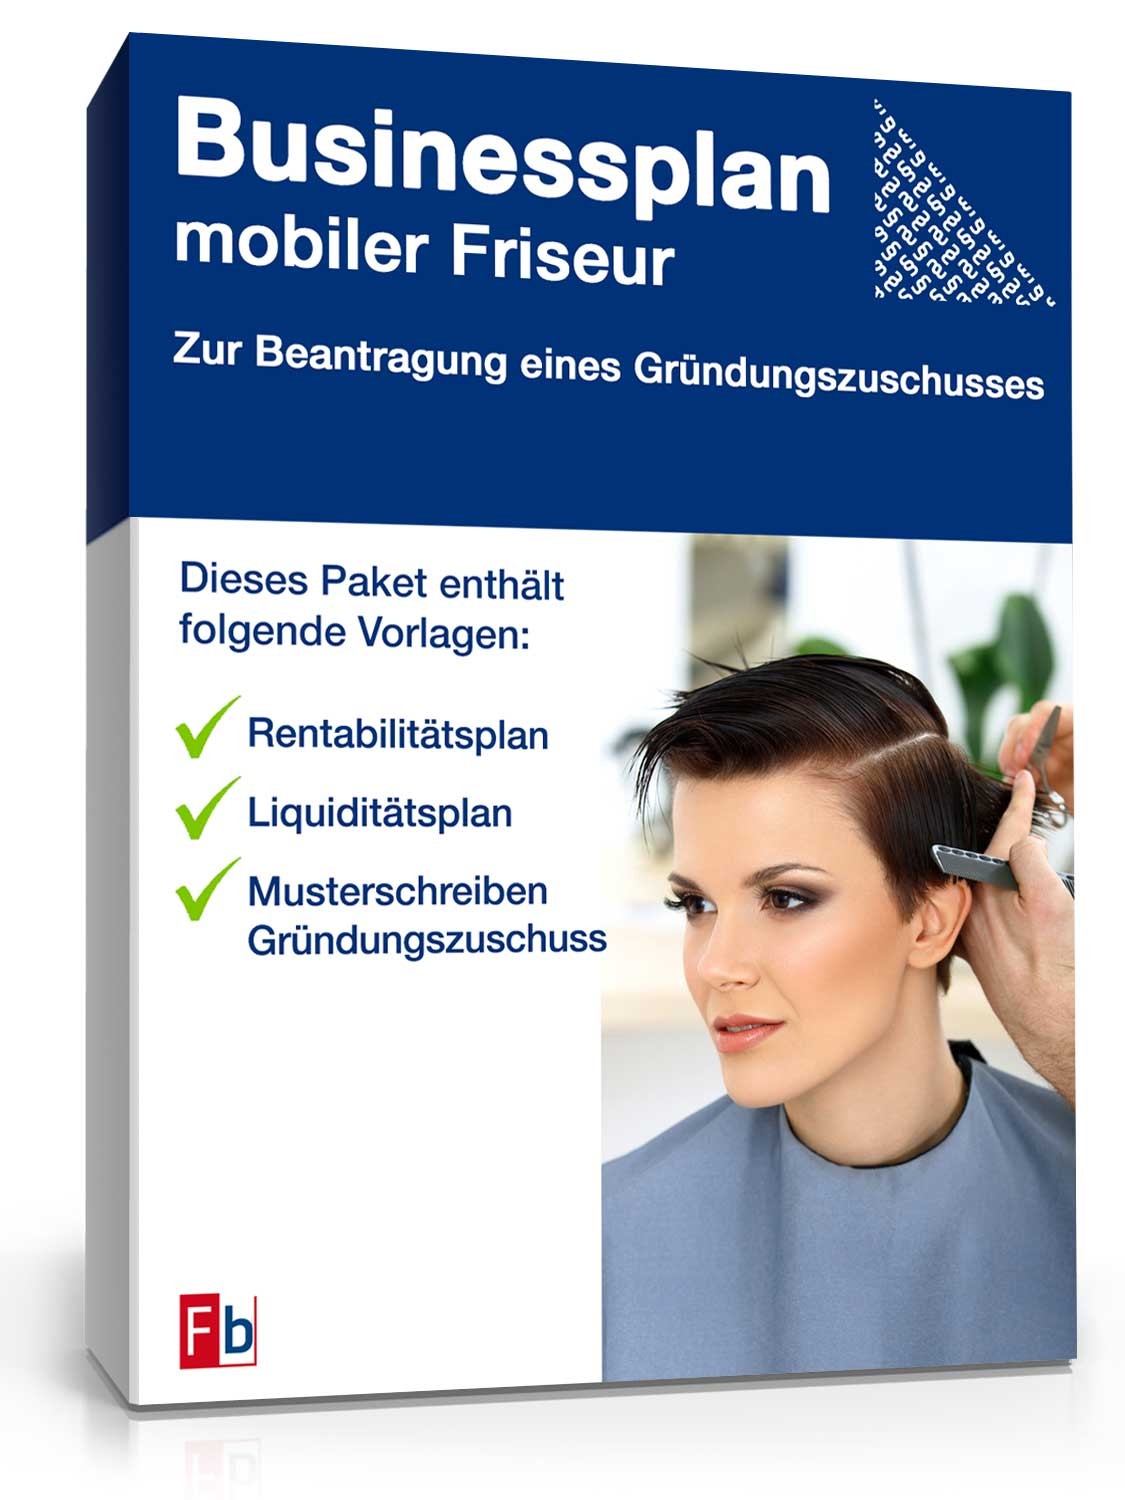 Hauptbild des Produkts: Businessplan mobiler Friseur 